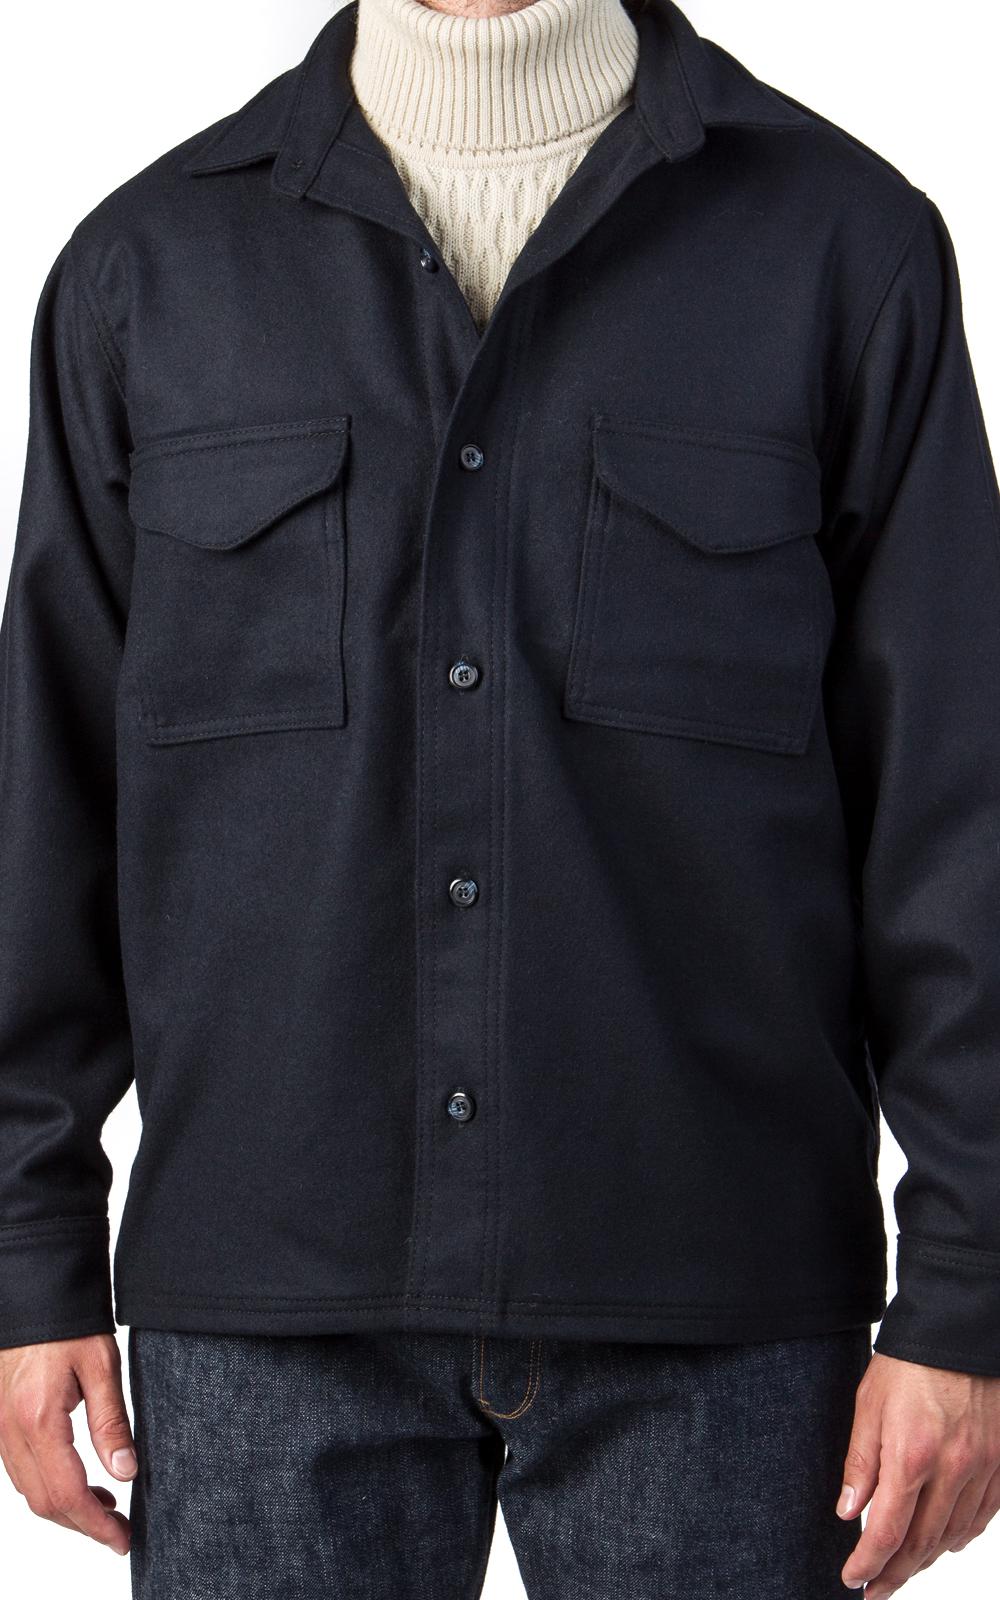 Filson Wool Jac-shirt Navy in Blue for Men - Lyst